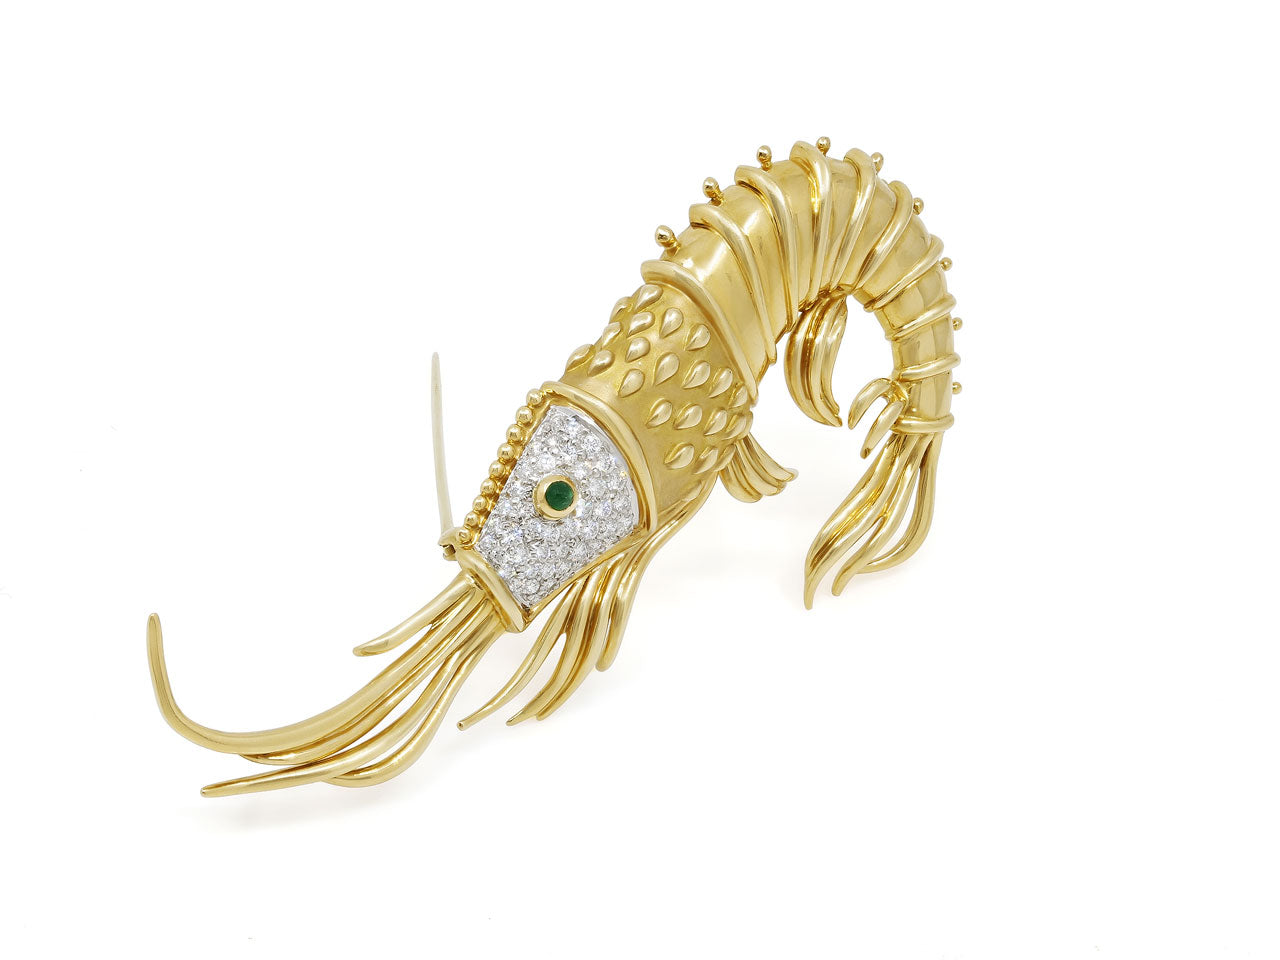 Tiffany & Co. Diamond Shrimp Brooch in 18K Gold